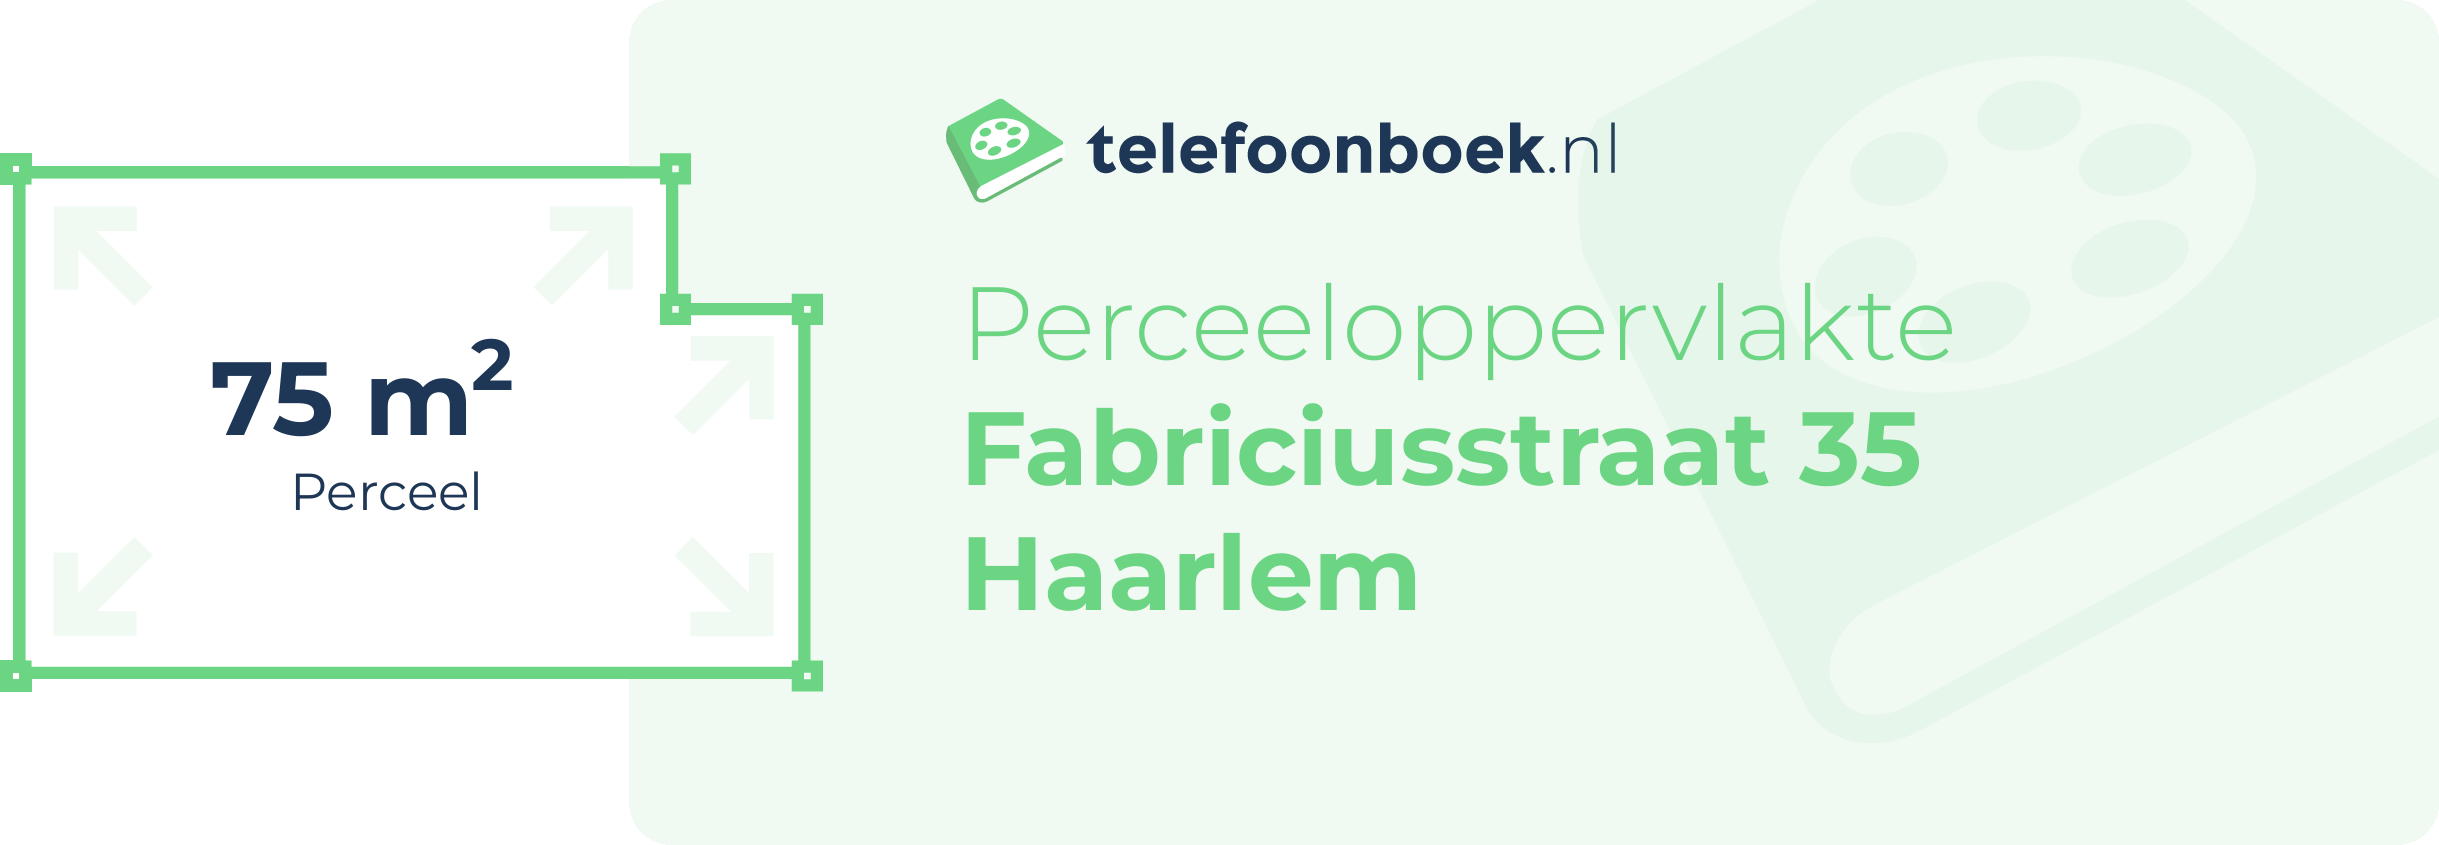 Perceeloppervlakte Fabriciusstraat 35 Haarlem